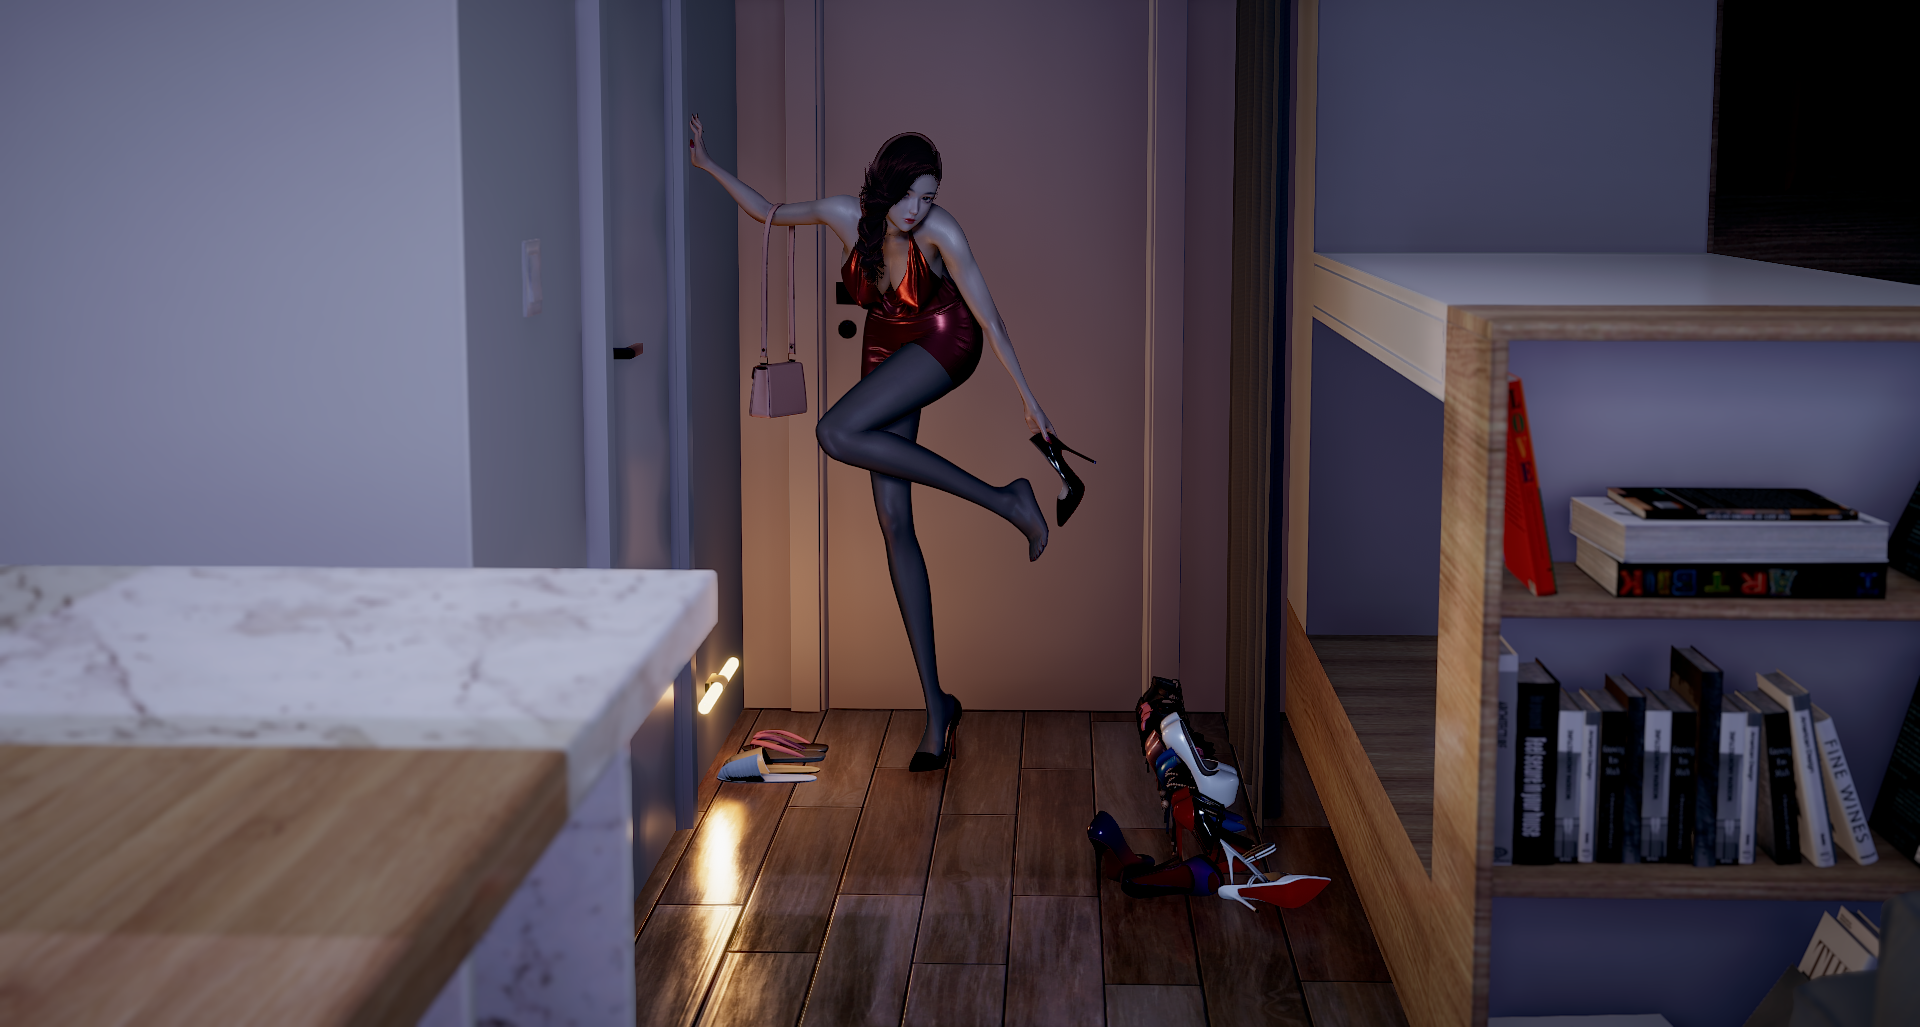 General 1920x1027 honey select 2 women legs Asian heels black heels red dress indoors video games video game characters